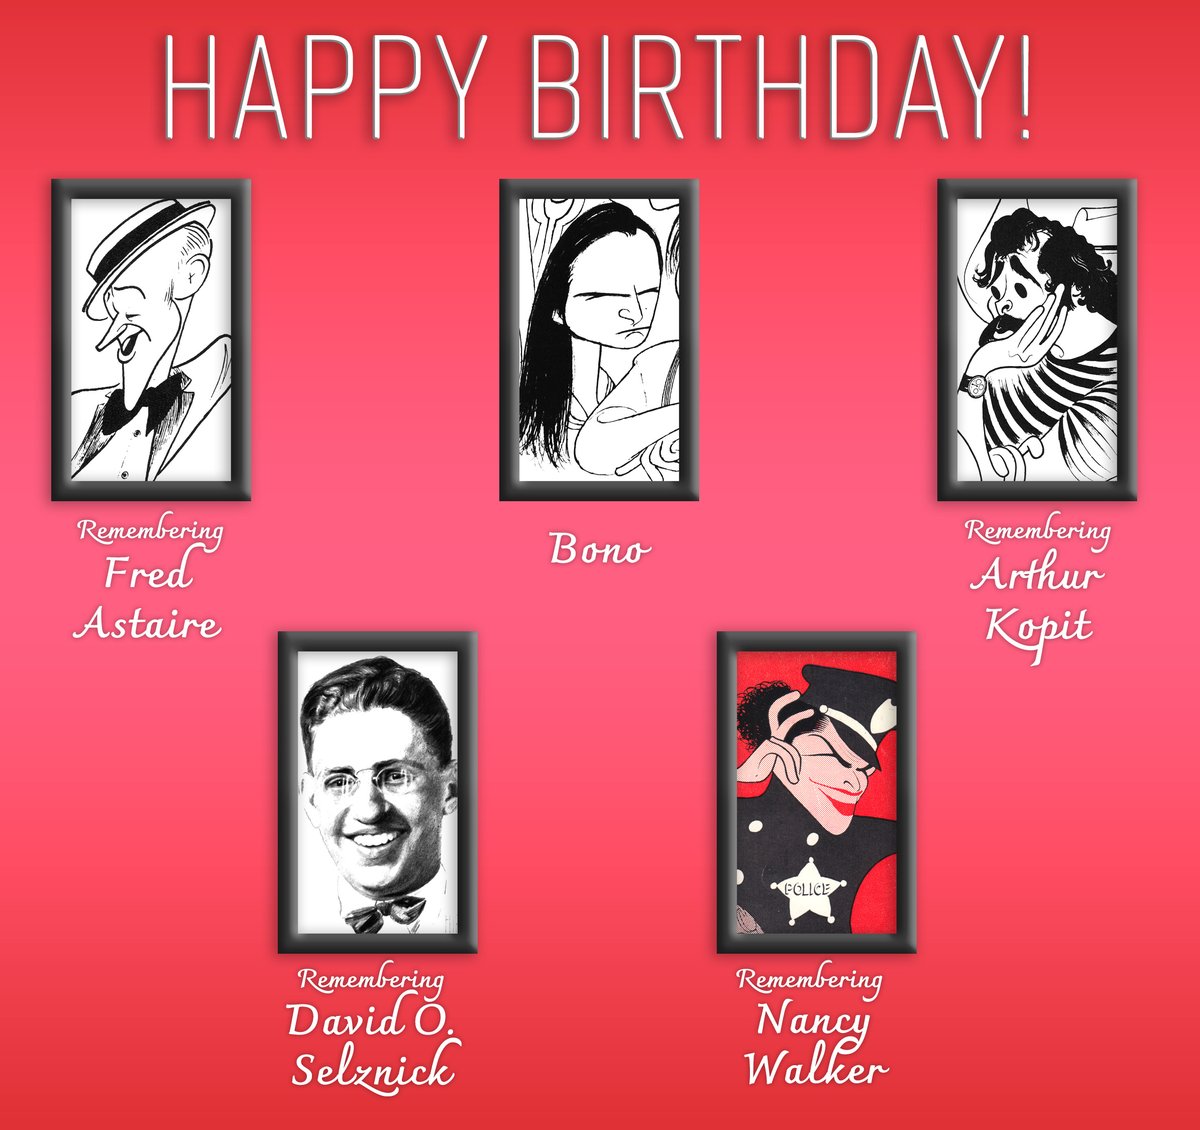 Today in Hirschfeld Birthdays: Fred Astaire, Bono, Arthur Kopek, David O. Selznick, and Nancy Walker! View full works at alhirschfeldfoundation.org #Hirschfeld #Art #Drawings #Birthdays #FredAstaire #Bono #Film #TV #Theater #Music #U2